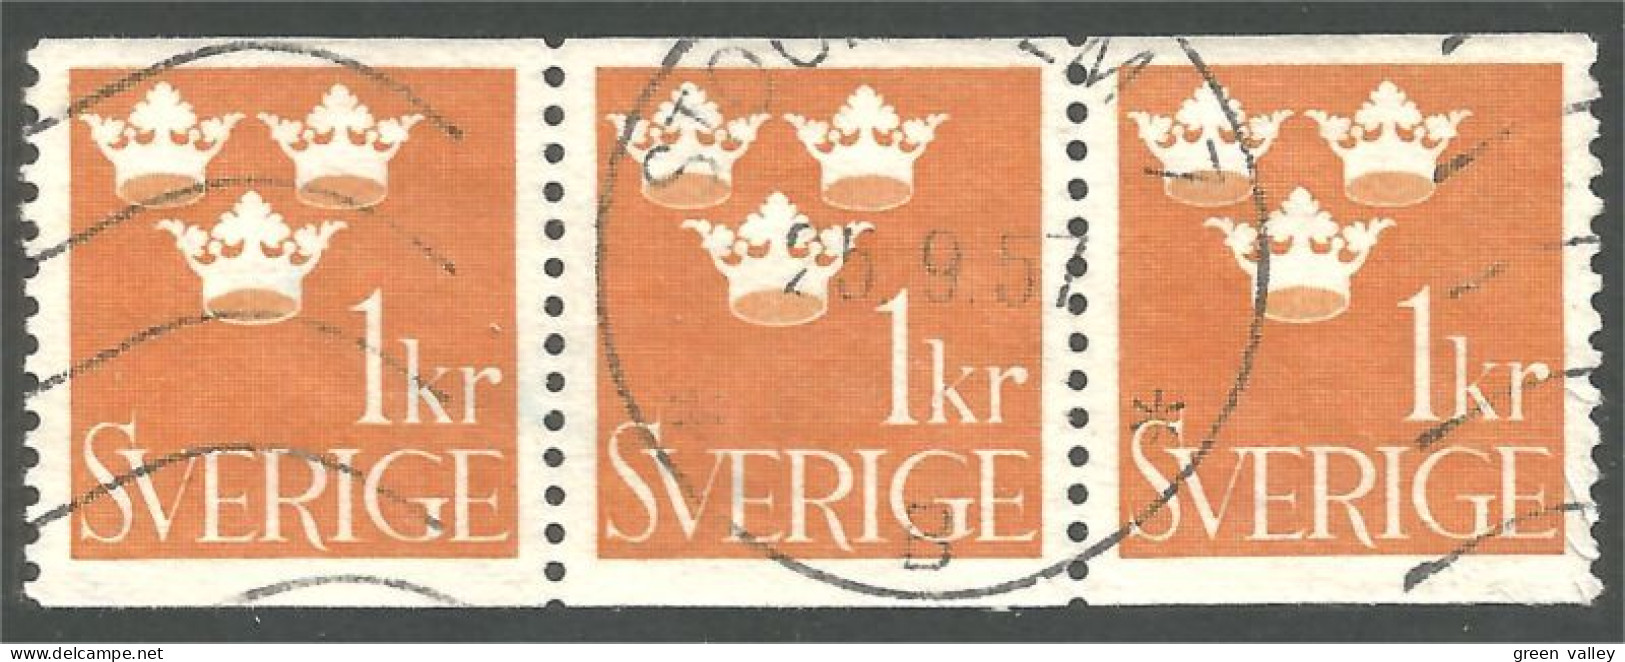 840 Sweden 1939 Trois Couronnes Three Crowns 1kr Orange Bande Strip 3 (SWE-426) - Usados